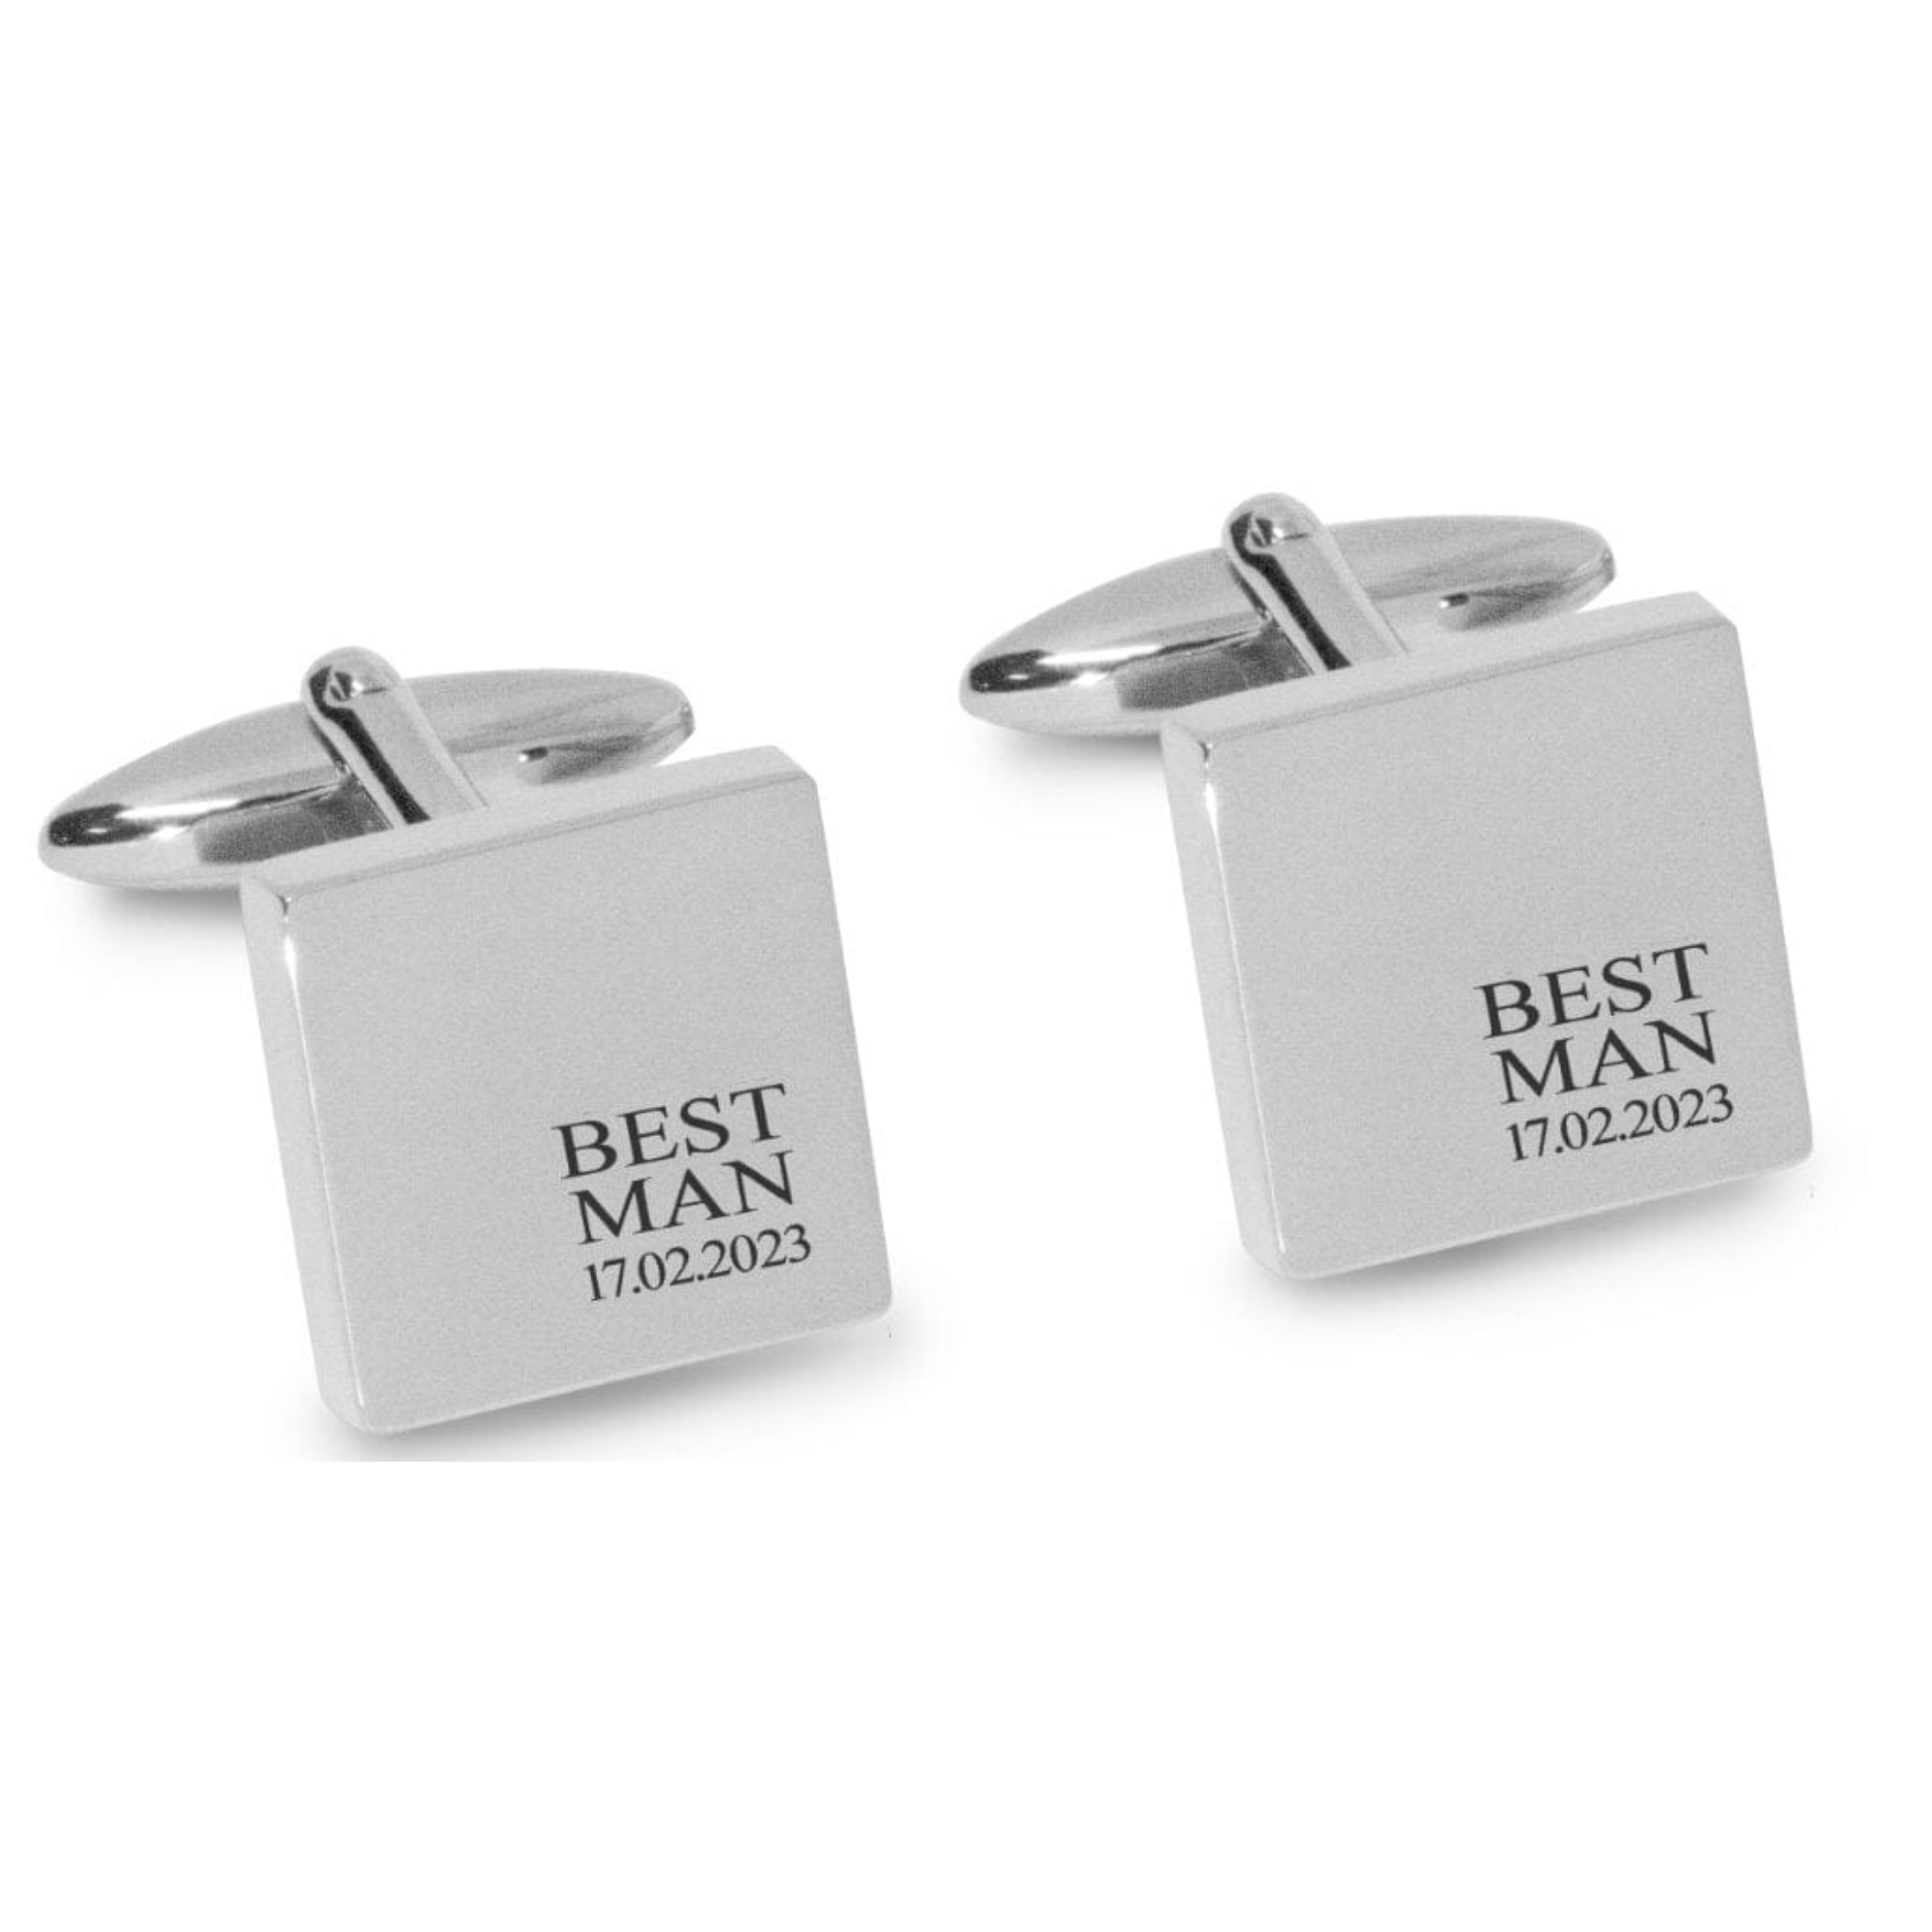 Best Man & Date Engraved Wedding Cufflinks in Silver